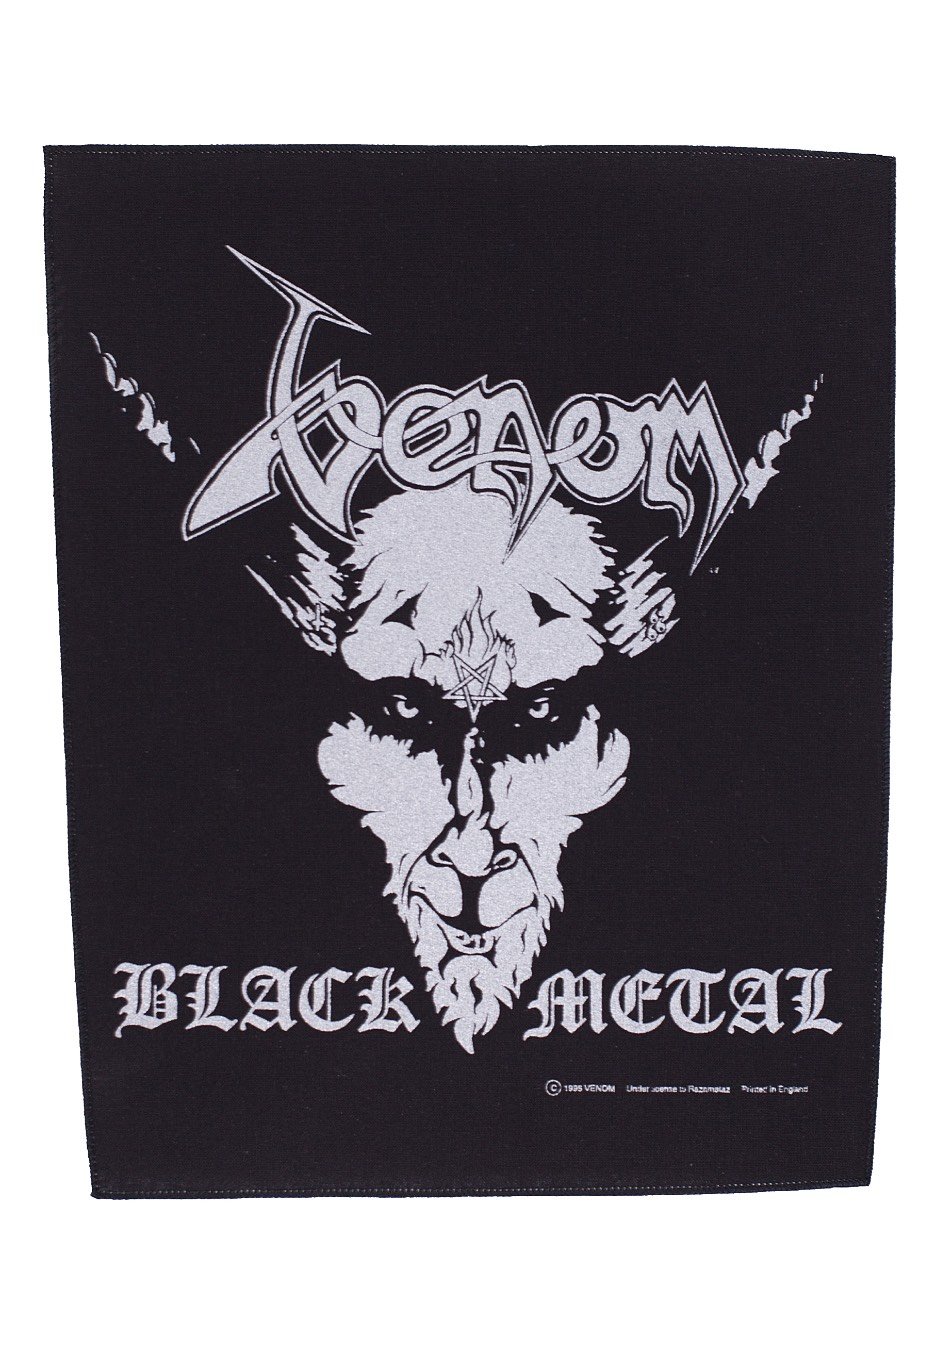 Venom - Black Metal - Backpatch